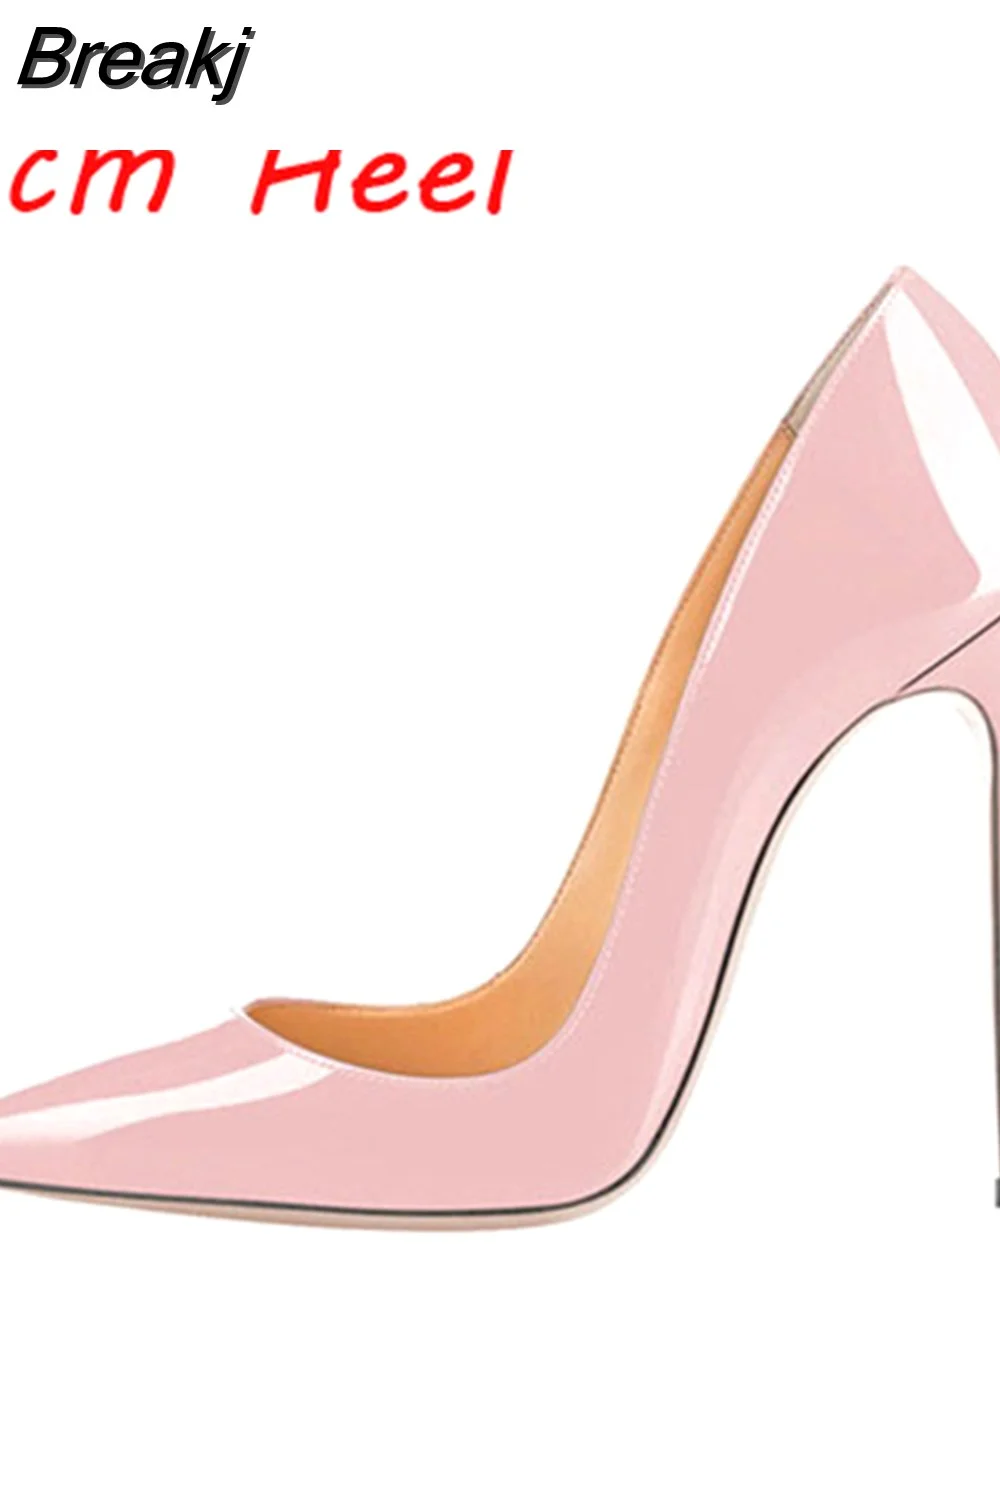 Breakj rose light pink elegant classic stiletto high heels shoes 12cm pumps pointde toe sexy wedding party QP066 ROVICIYA